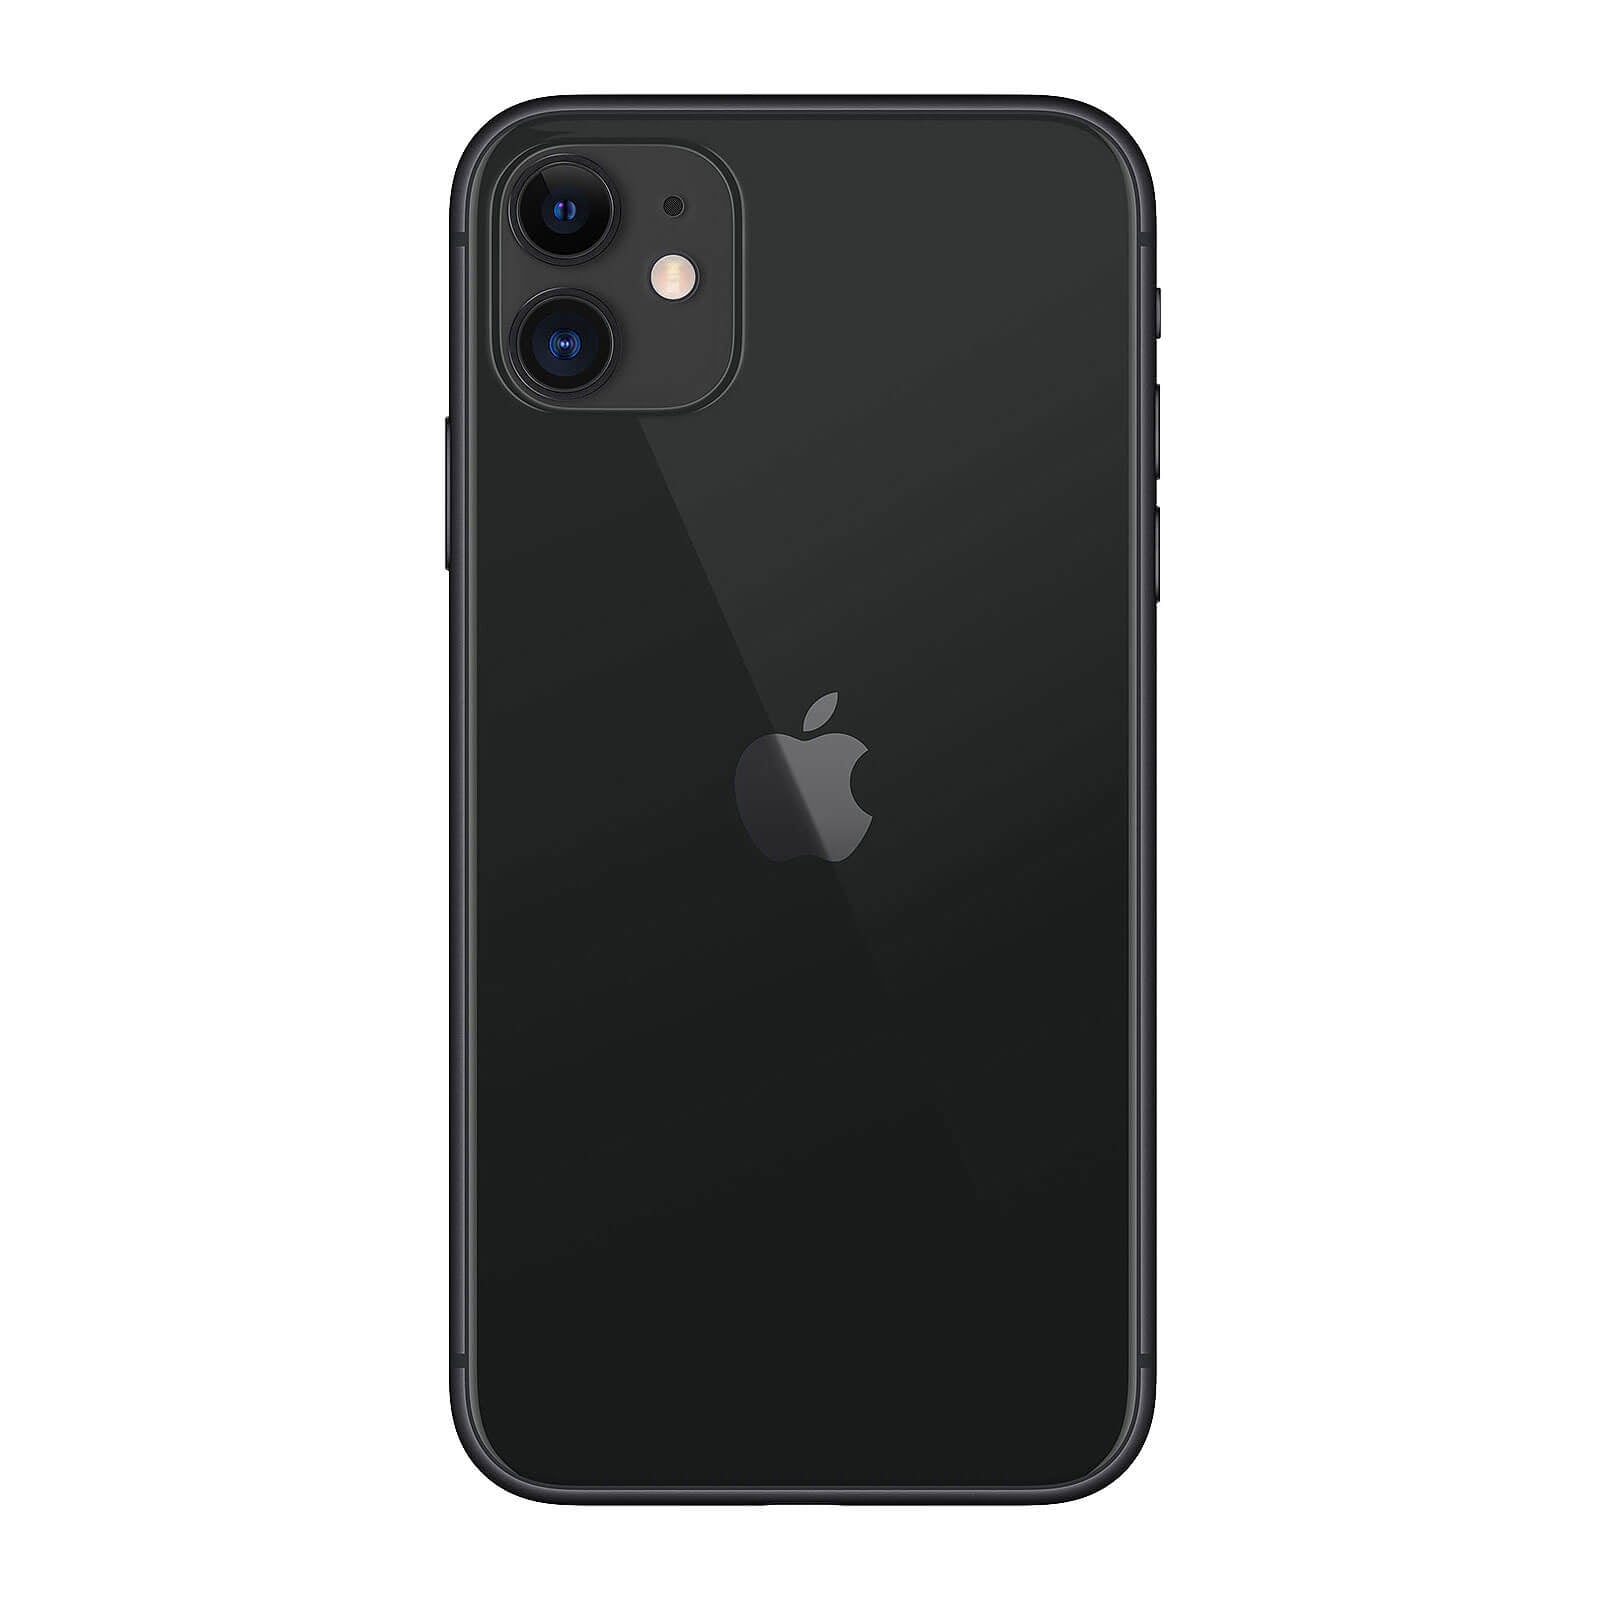 Apple iPhone 11 256GB Black Pristine - Unlocked